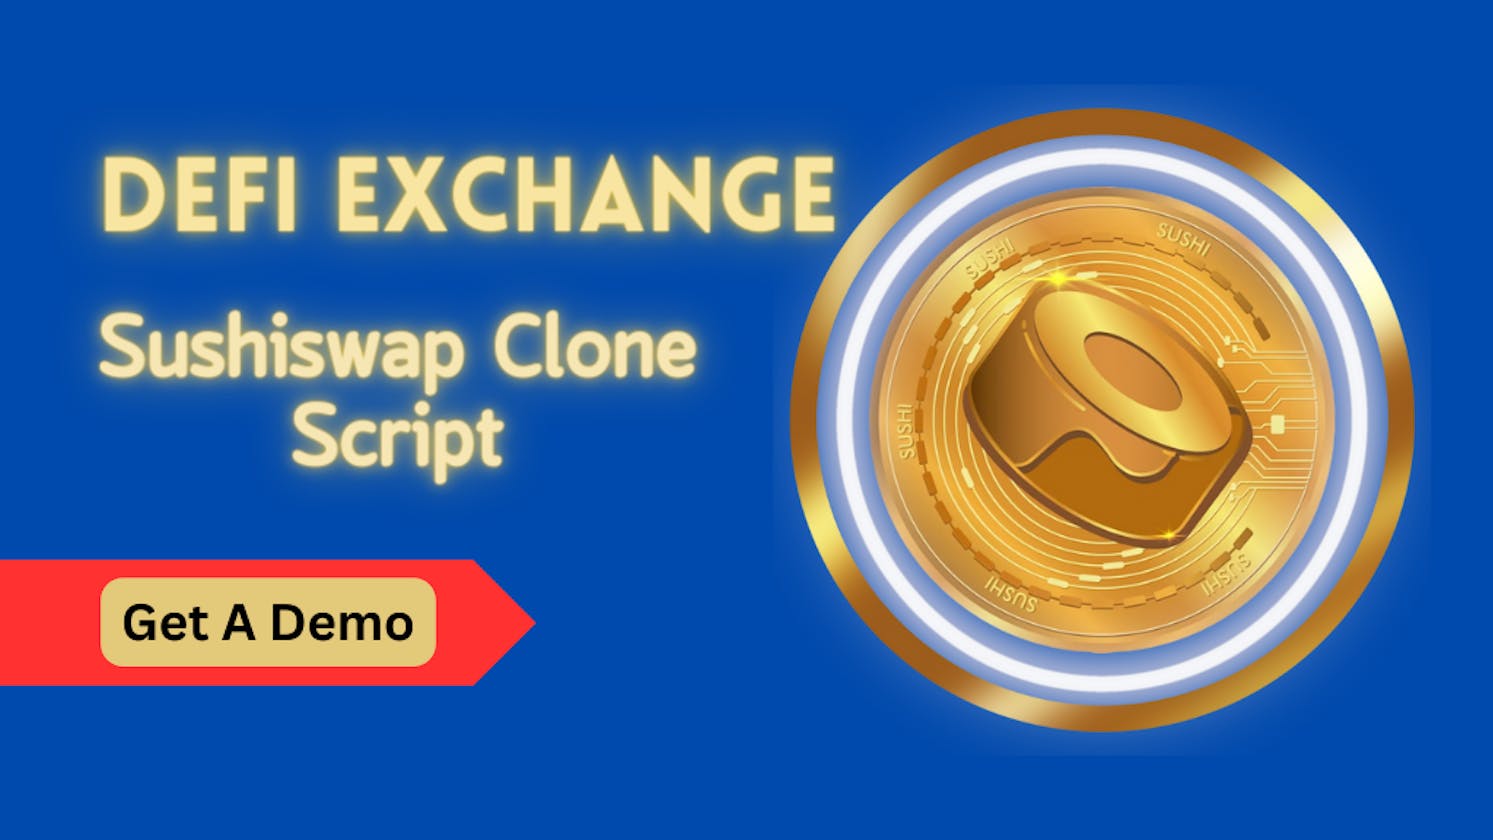 Sushiswap clone script - Launch your Defi Exchange Quickly